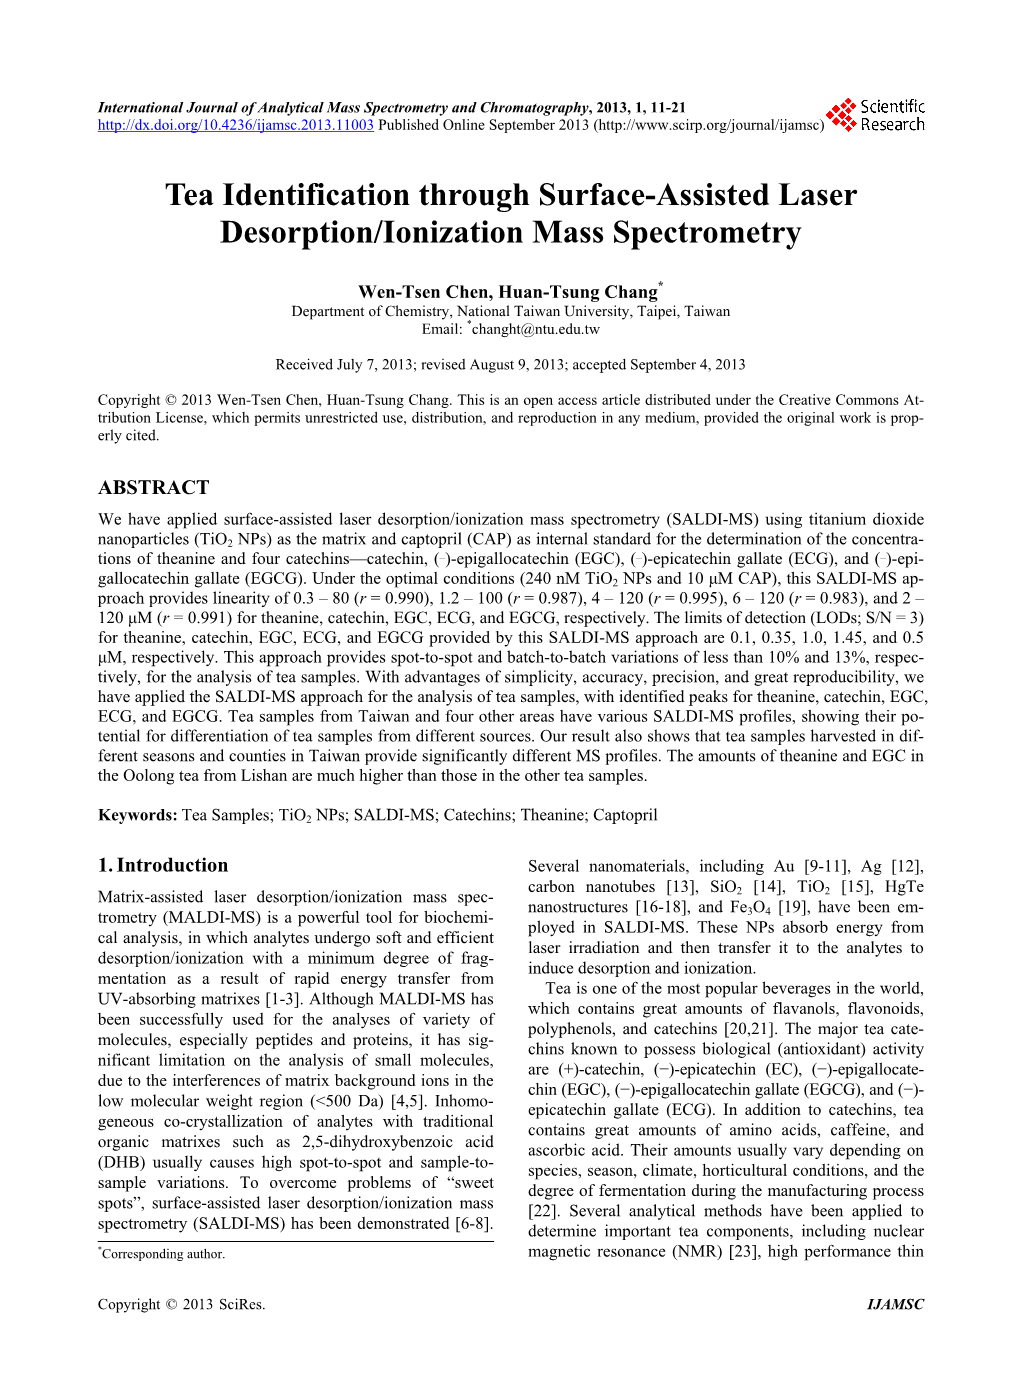 Tea Identification Through Surface-Assisted Laser Desorption/Ionization Mass Spectrometry